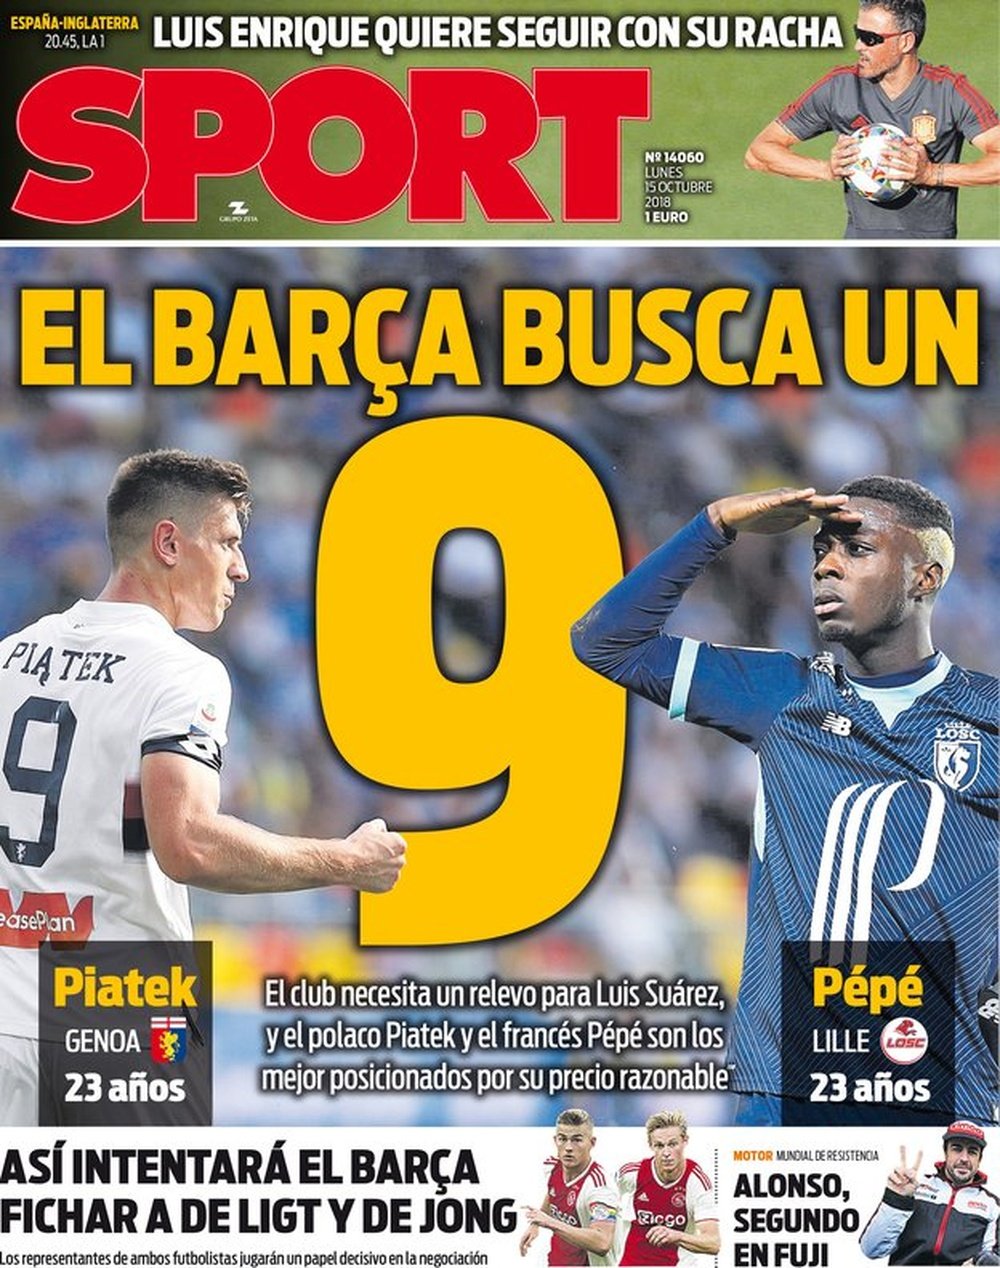 Capa do jornal 'Sport' de 15-10-18. Sport